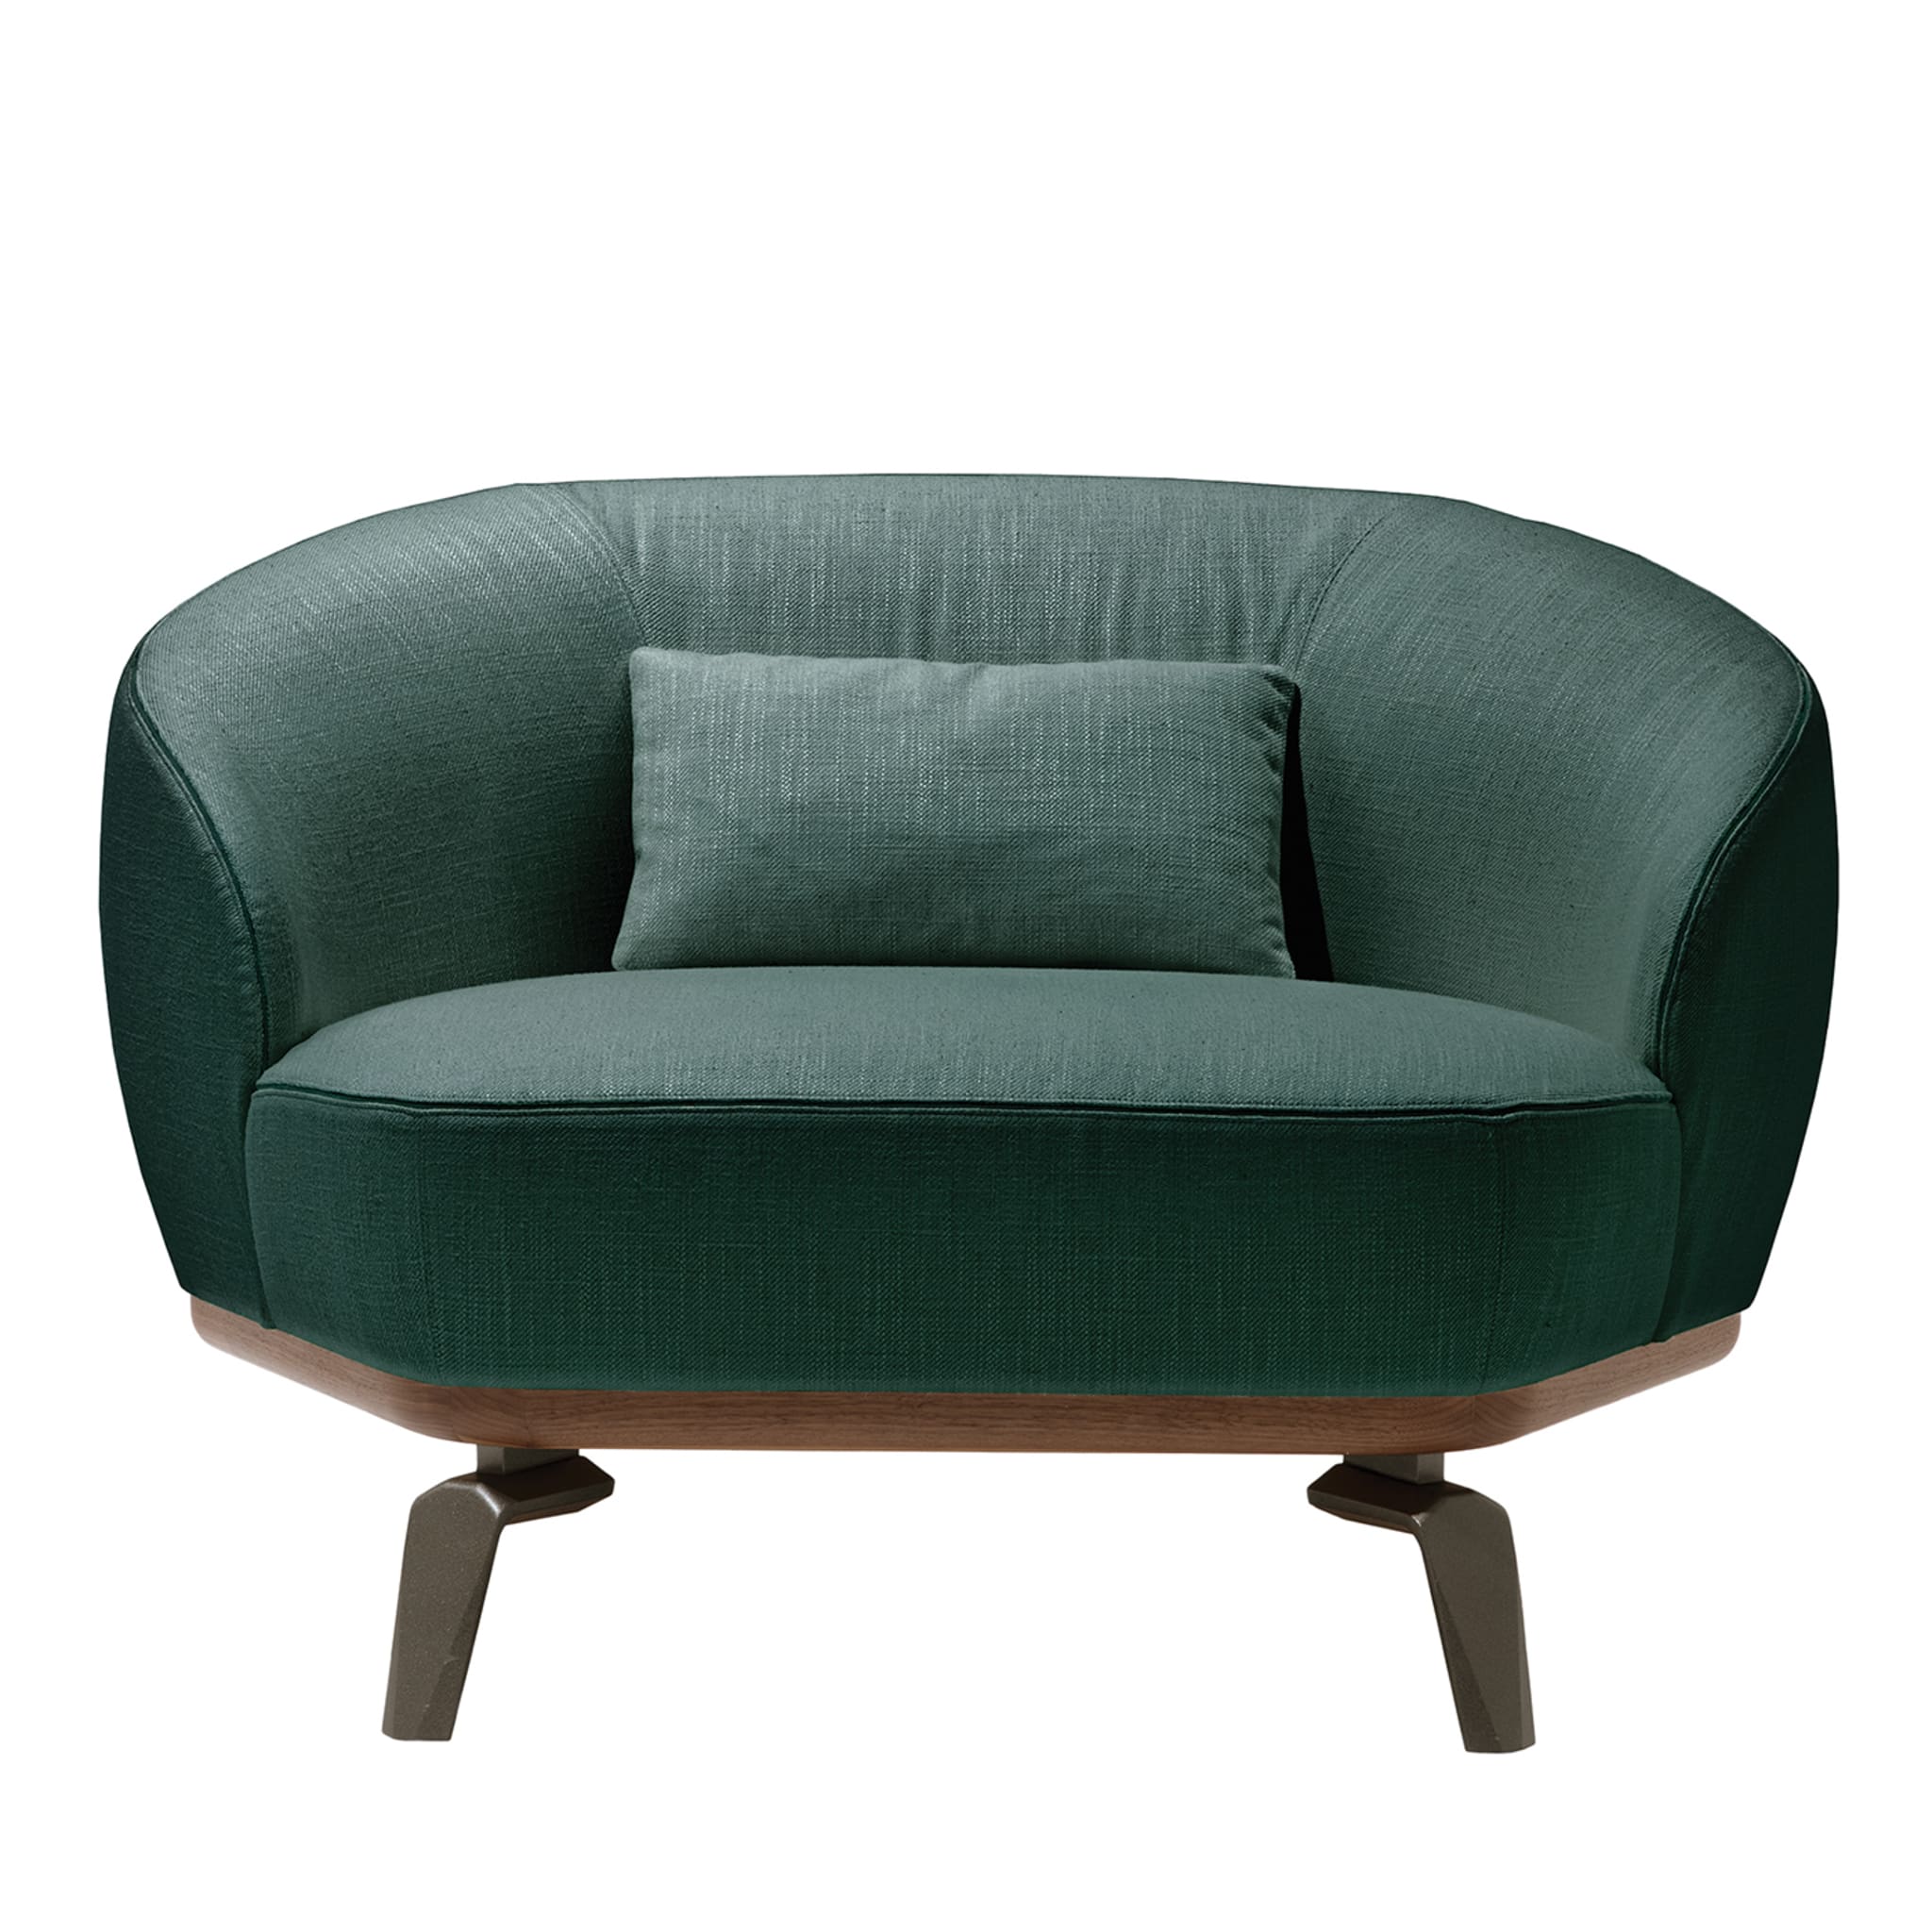 Tamino Green Armchair - Main view